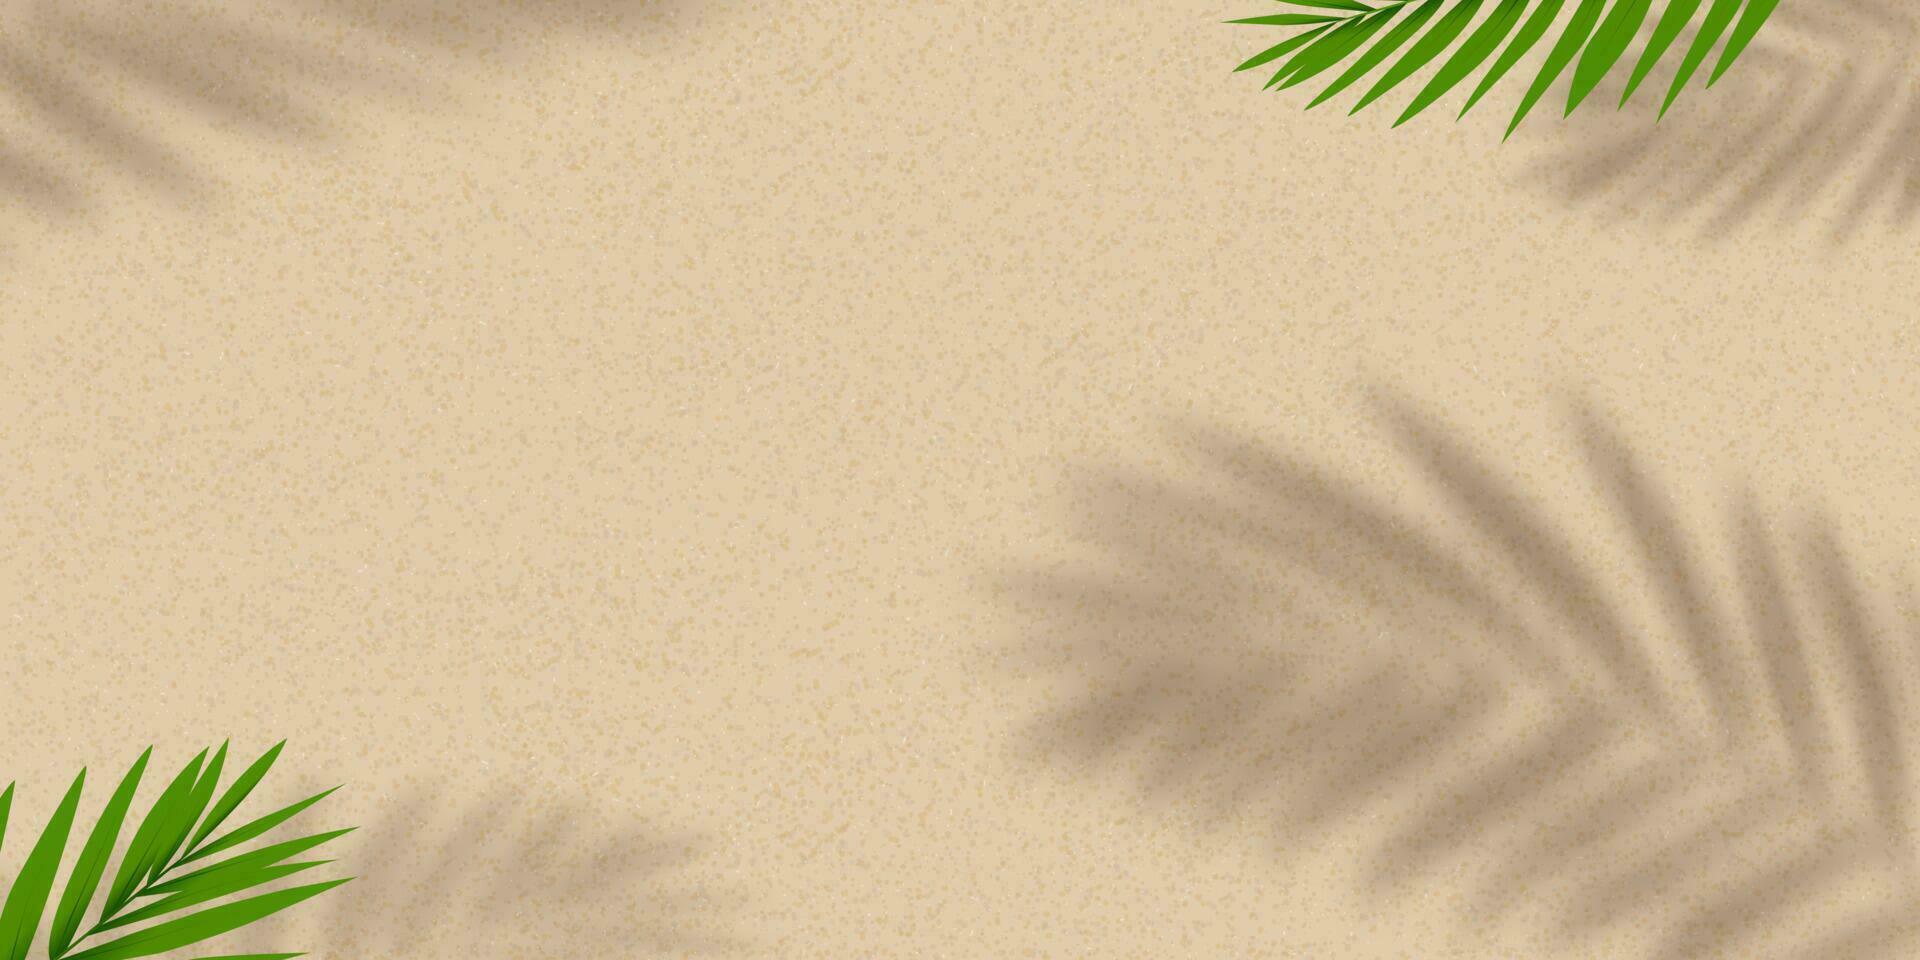 zand structuur achtergrond met palm bladeren silhouet, kokosnoot blad schaduw Aan bruin zanderig strand, vector top visie zand oppervlak, achtergrond achtergrond breed horizon woestijn duin voor zomer Product presentatie